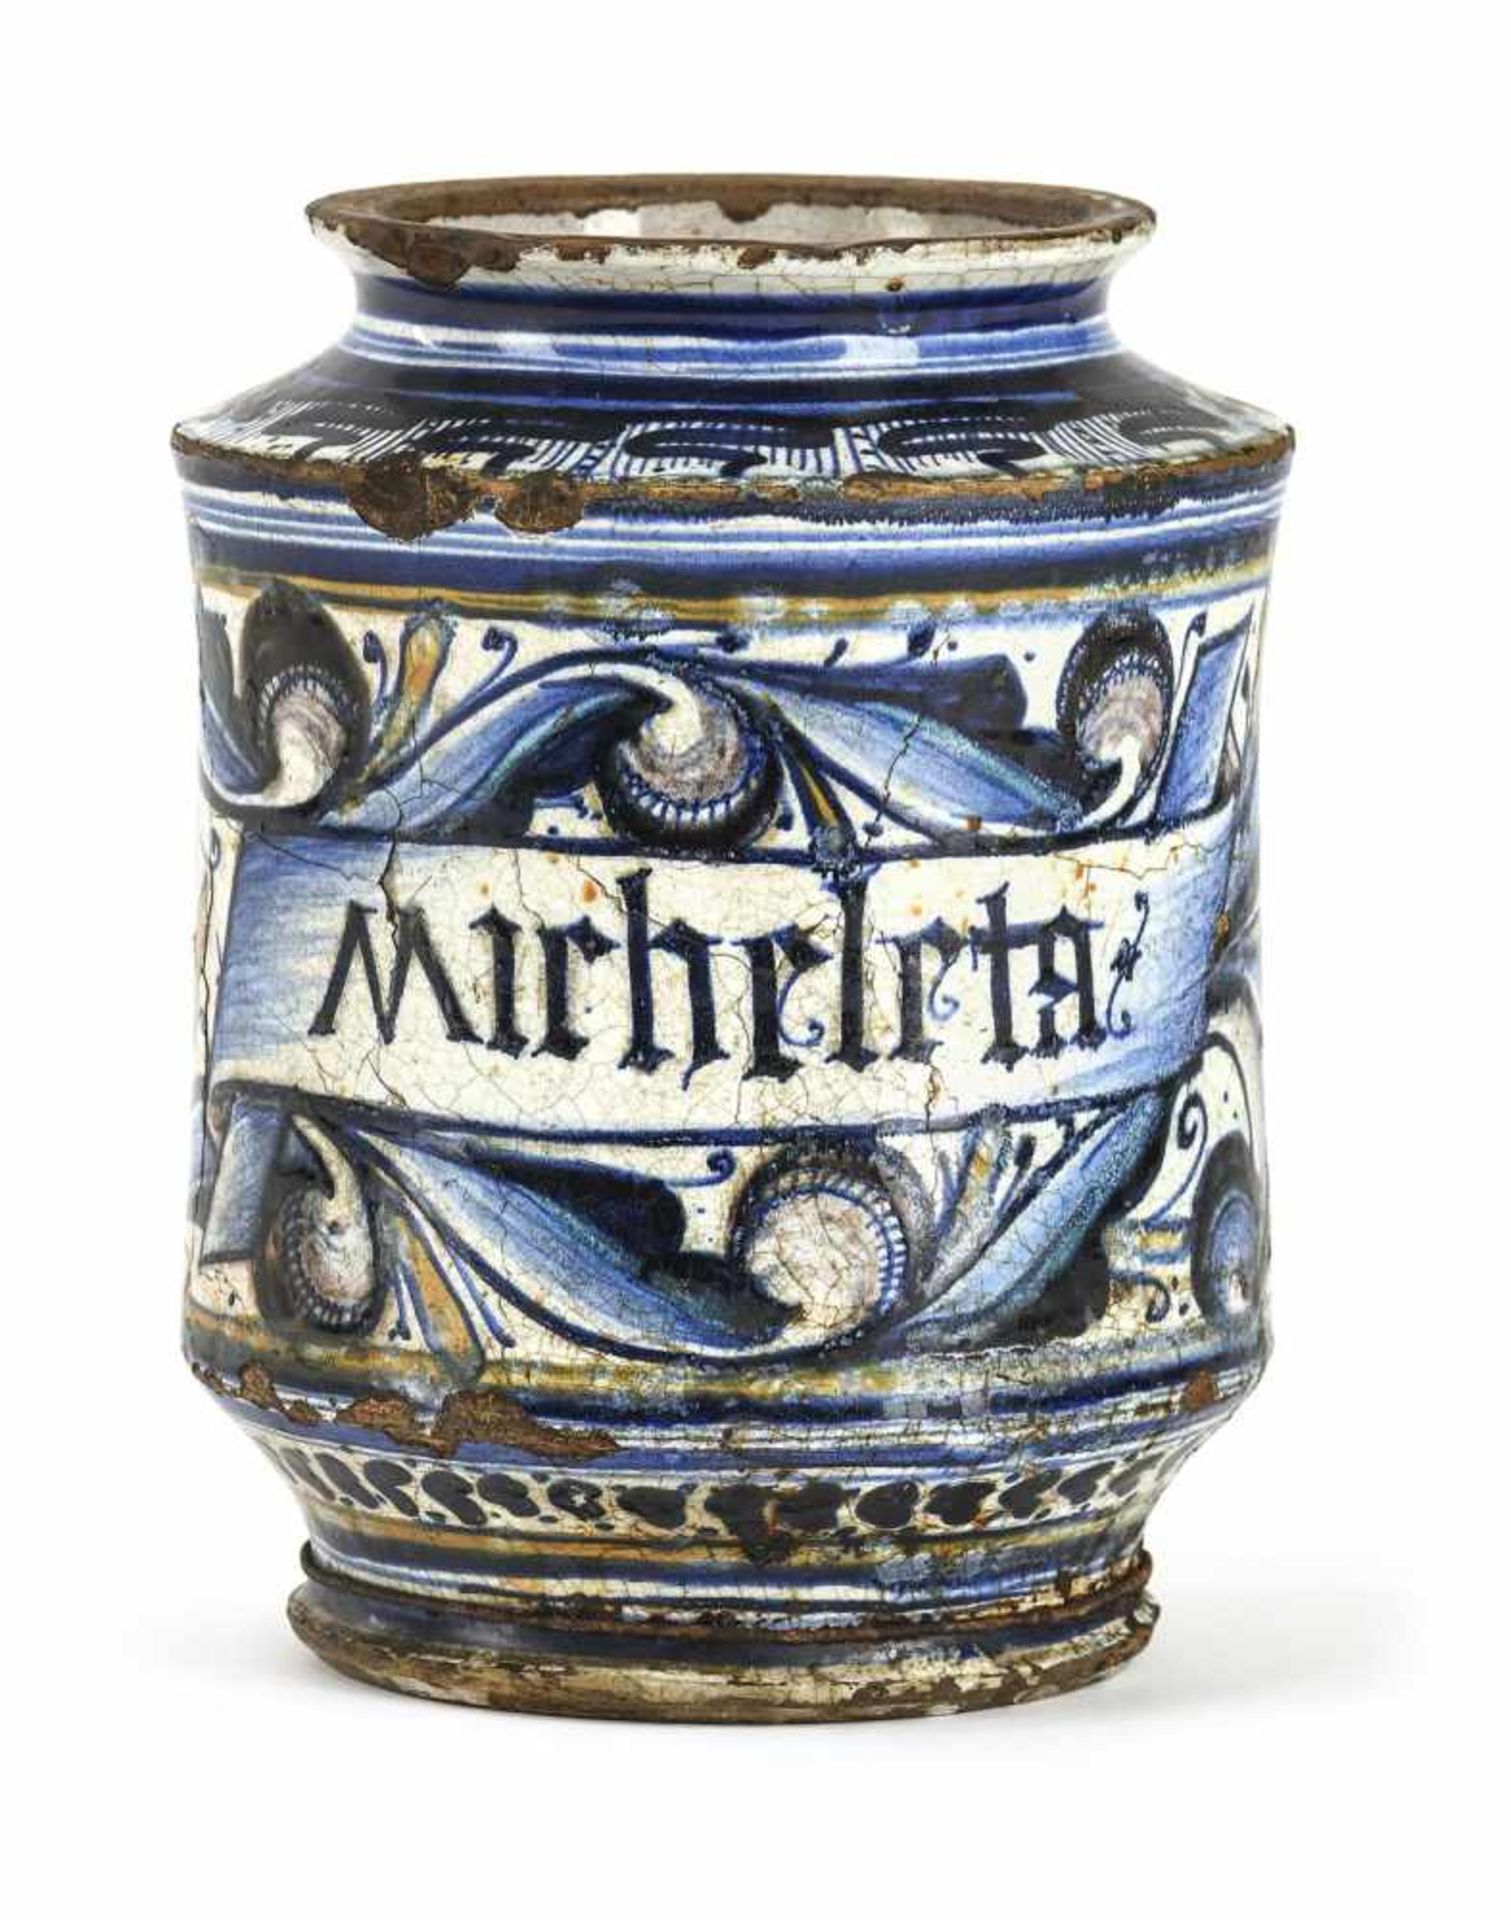 AN EARLY ITALIAN MAIOLICA PHARMACY JAR "ALBARELLO", Faenza, 15th century. Scientific inscription and